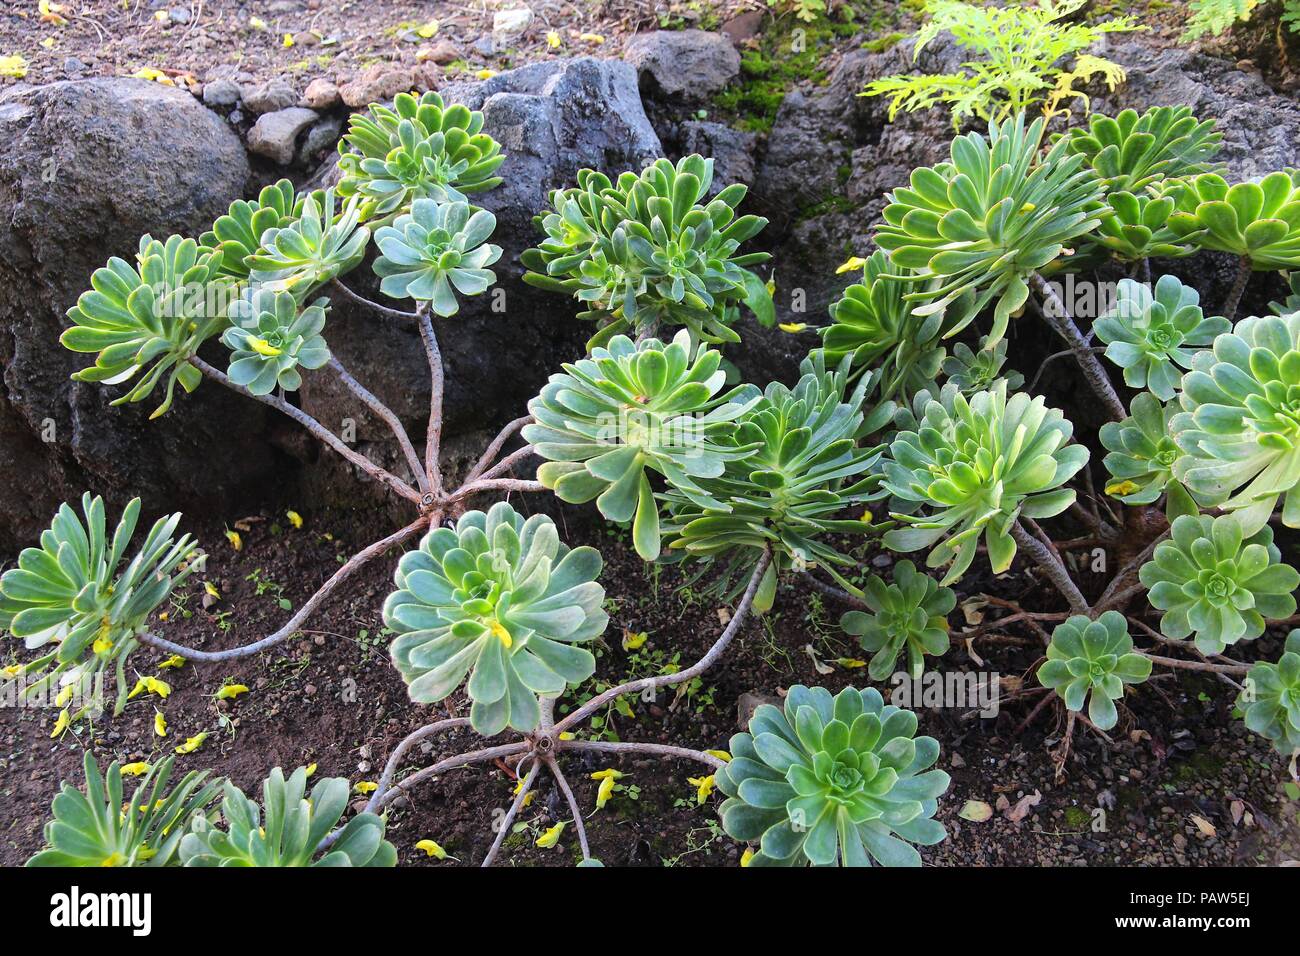 Jardin Canario - botanical garden of Gran Canaria, Spain. Tree Houseleek plant species (Aeonium Gomerense). Endangered species endemic to the island o Stock Photo